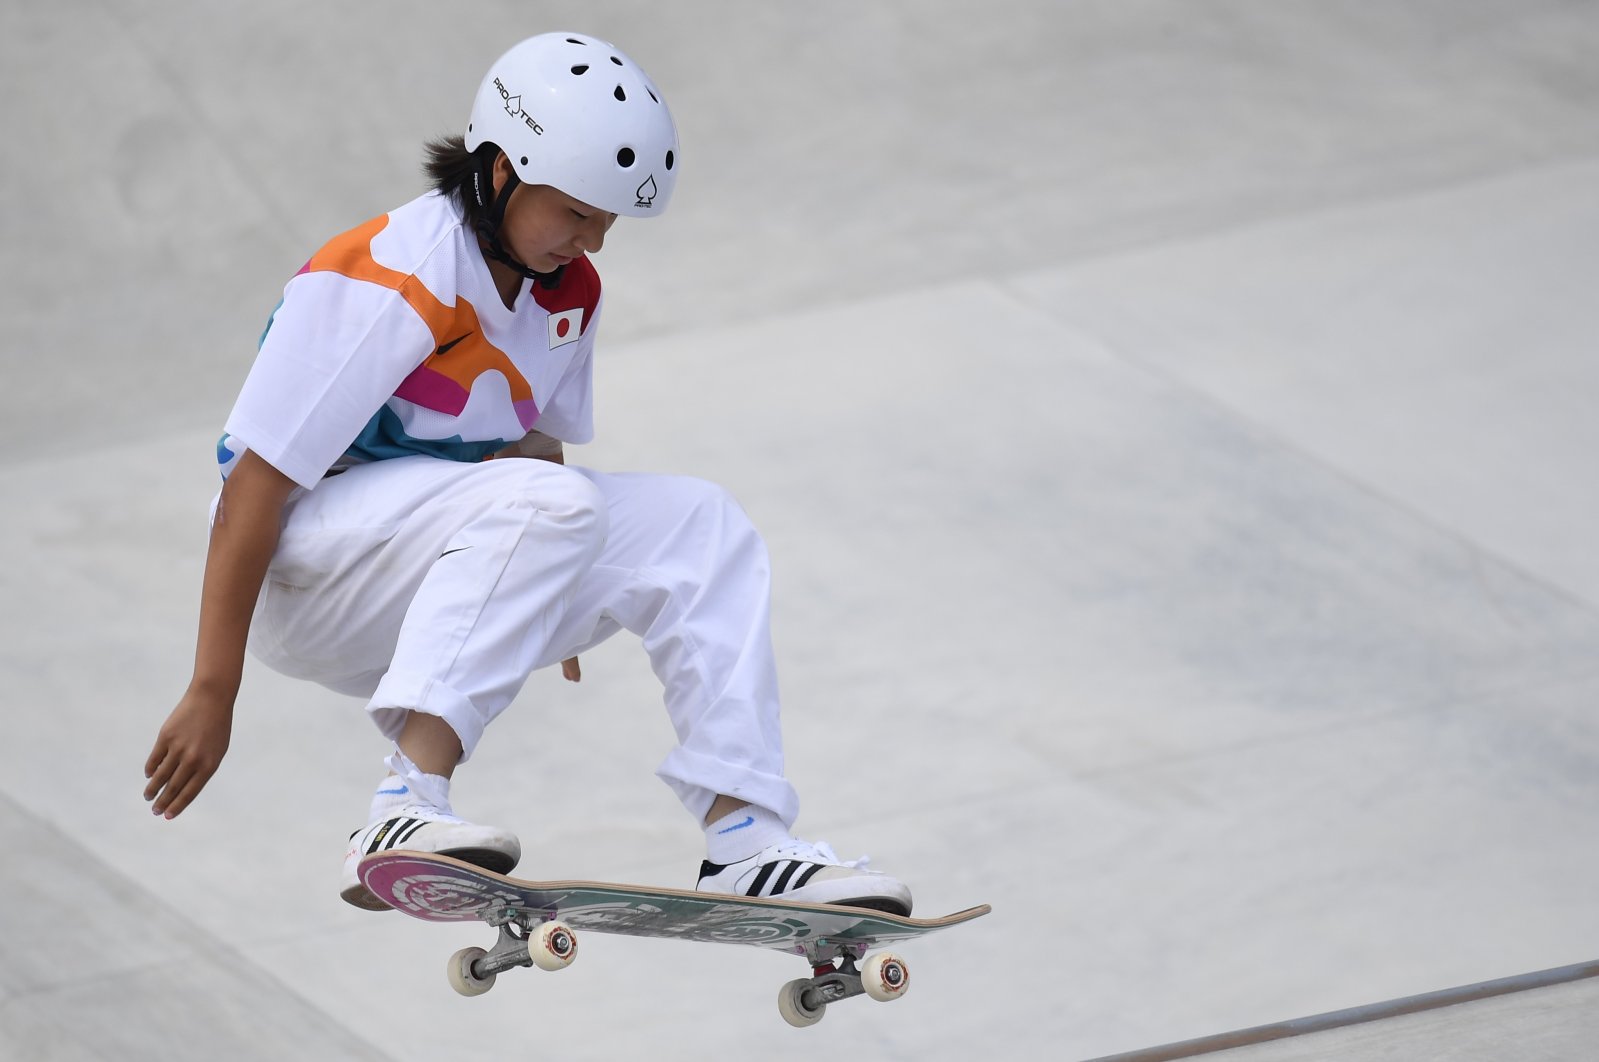 Japan's Momiji Nishiya in action during the Tokyo 2020 Olympics Women's Street Skateboarding Final at the Ariake Urban Sports Park, Tokyo, Japan, July 26, 2021. (Reuters Photo)